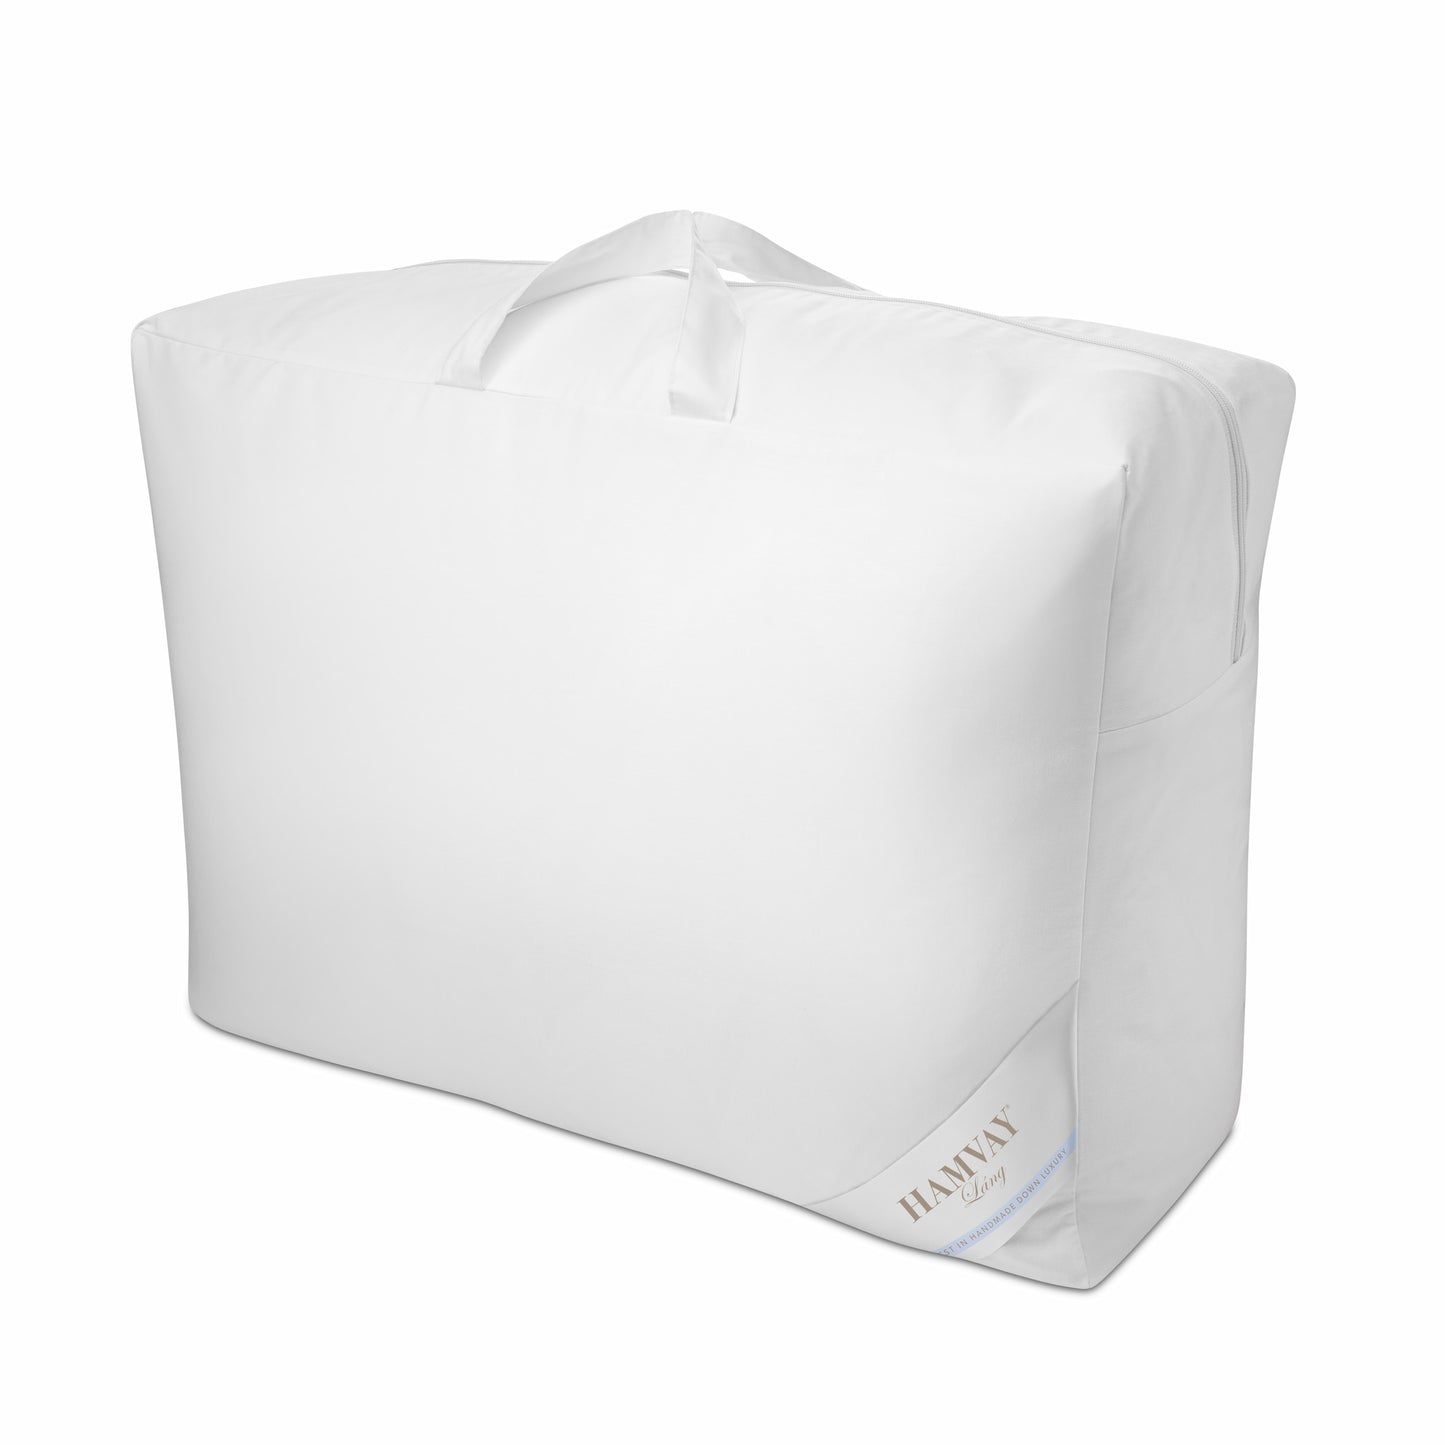 Hamvay-Láng comforter storage bag